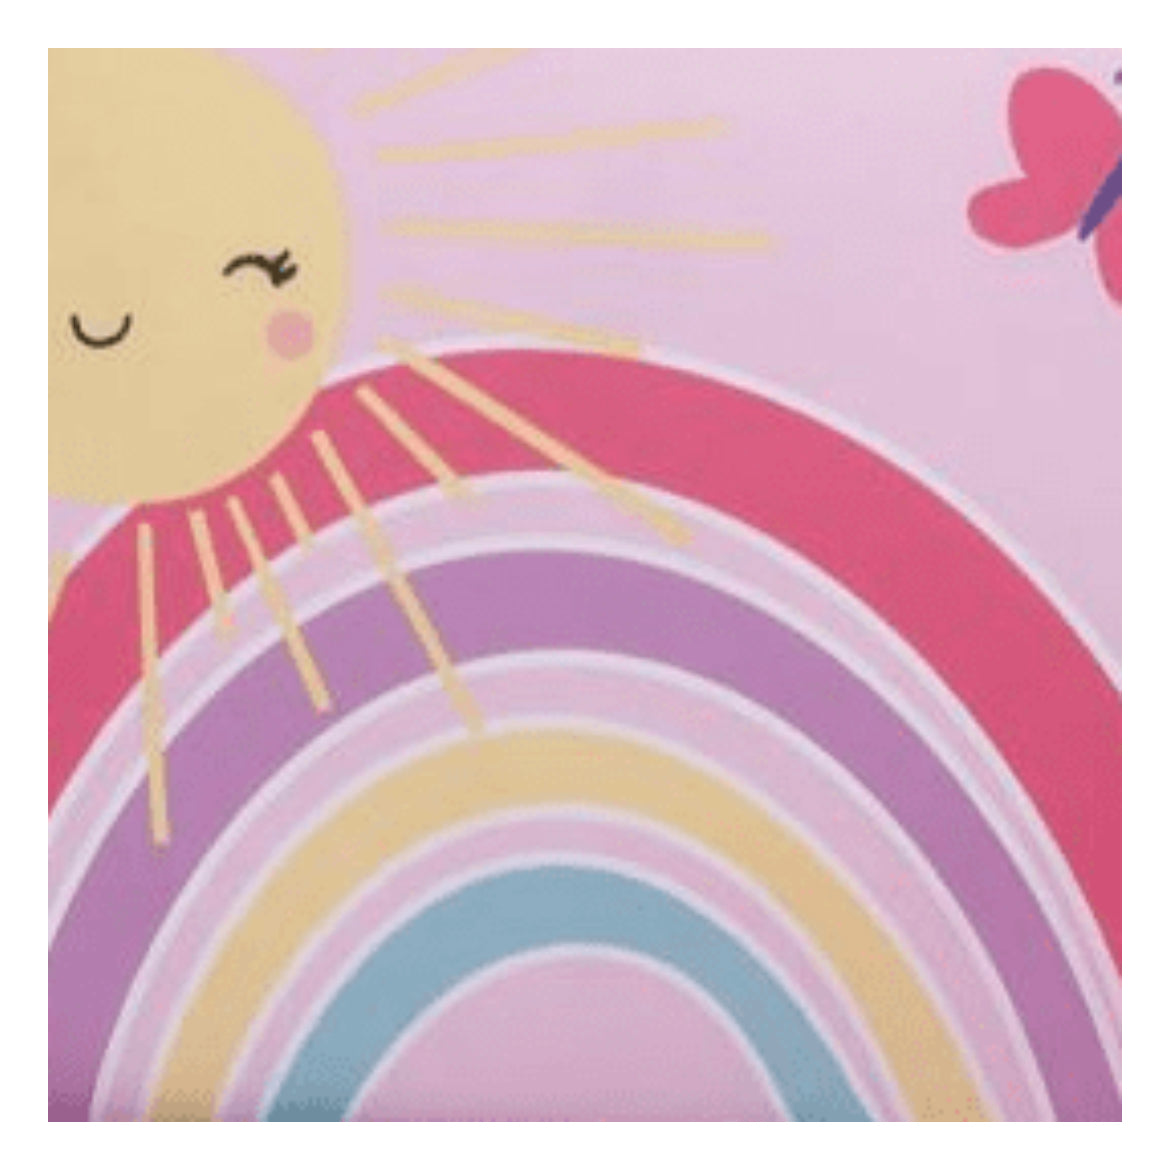 Parent's Choice 4 Piece Llama Bedding Set, Toddler Bed, Pink and Purple, Toddler Girl Bedding